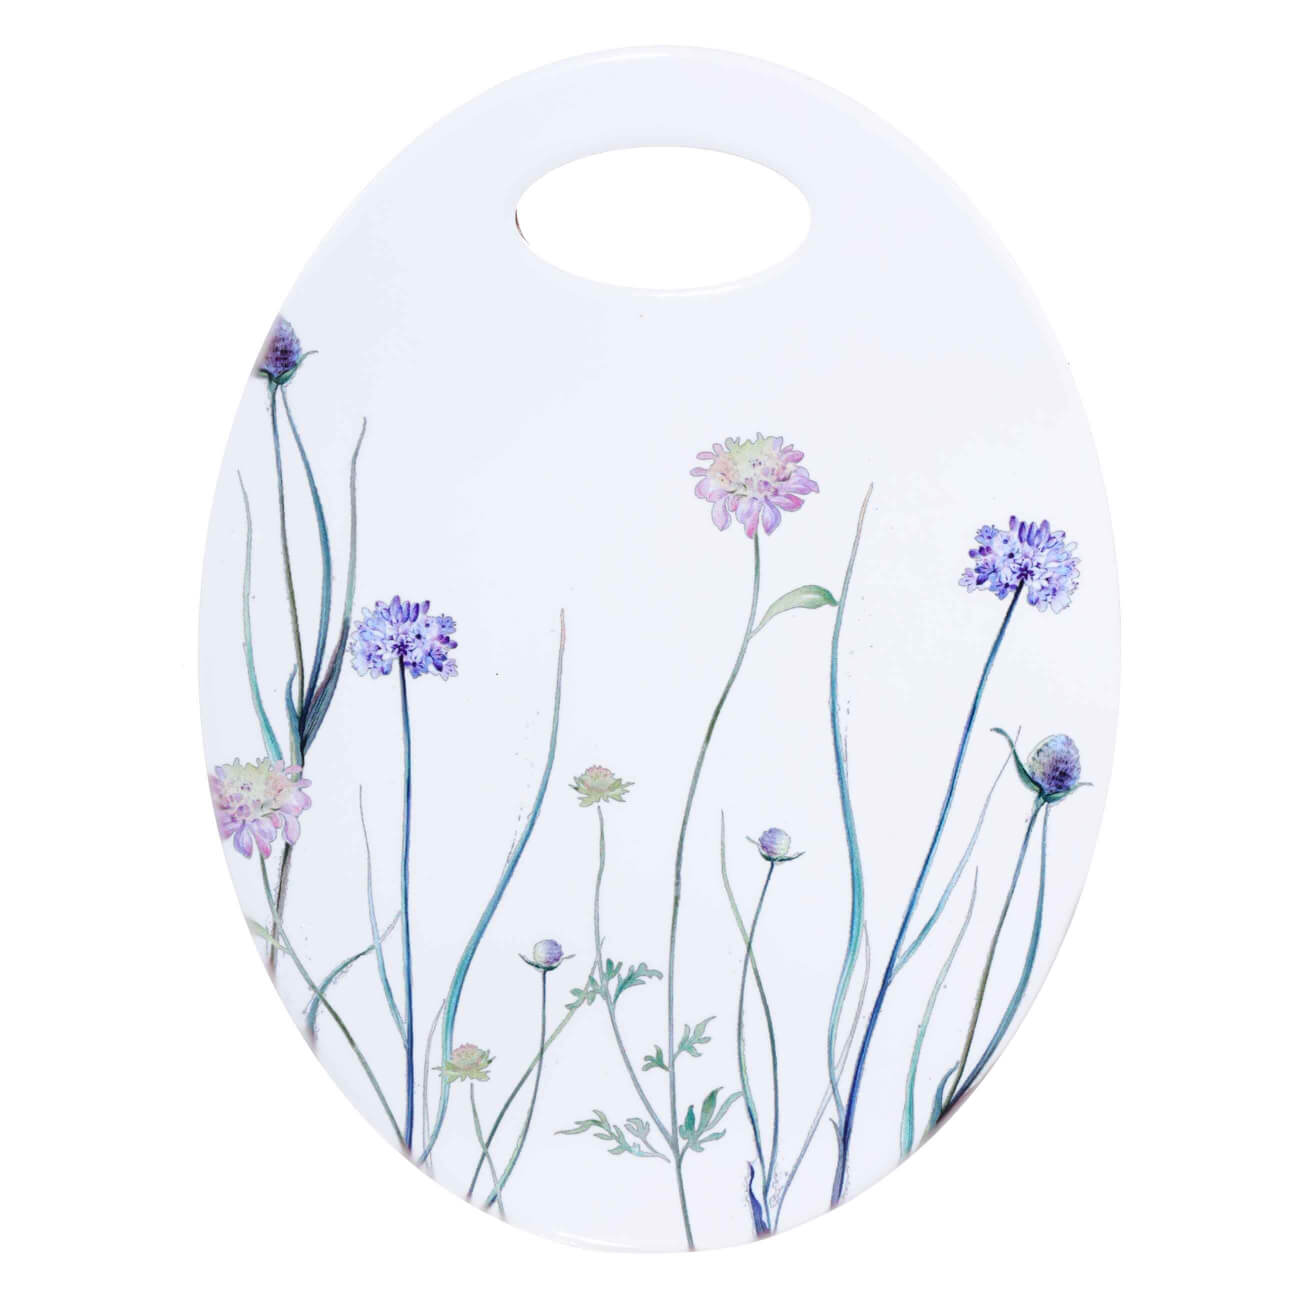 Hot plate, 15x20 cm, ceramic / cork, oval, white, Wildflowers, Meadow изображение № 1